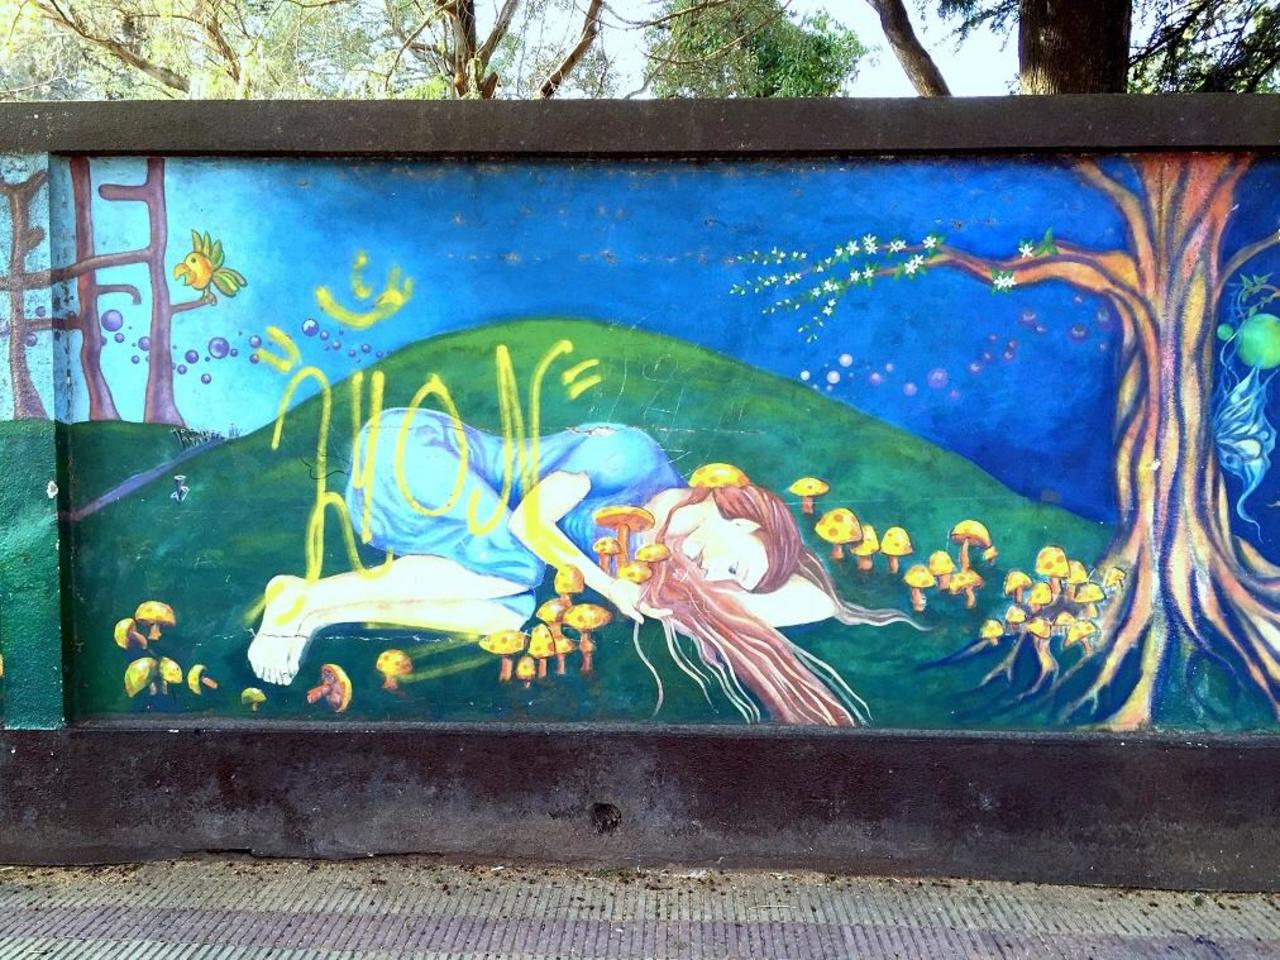 #Graffiti de hoy: <La bella durmiente del bosque> calle 9, 66y67 #LaPlata #Argentina #StreetArt #UrbanArt #ArteUrbano http://t.co/N4RriuRvup